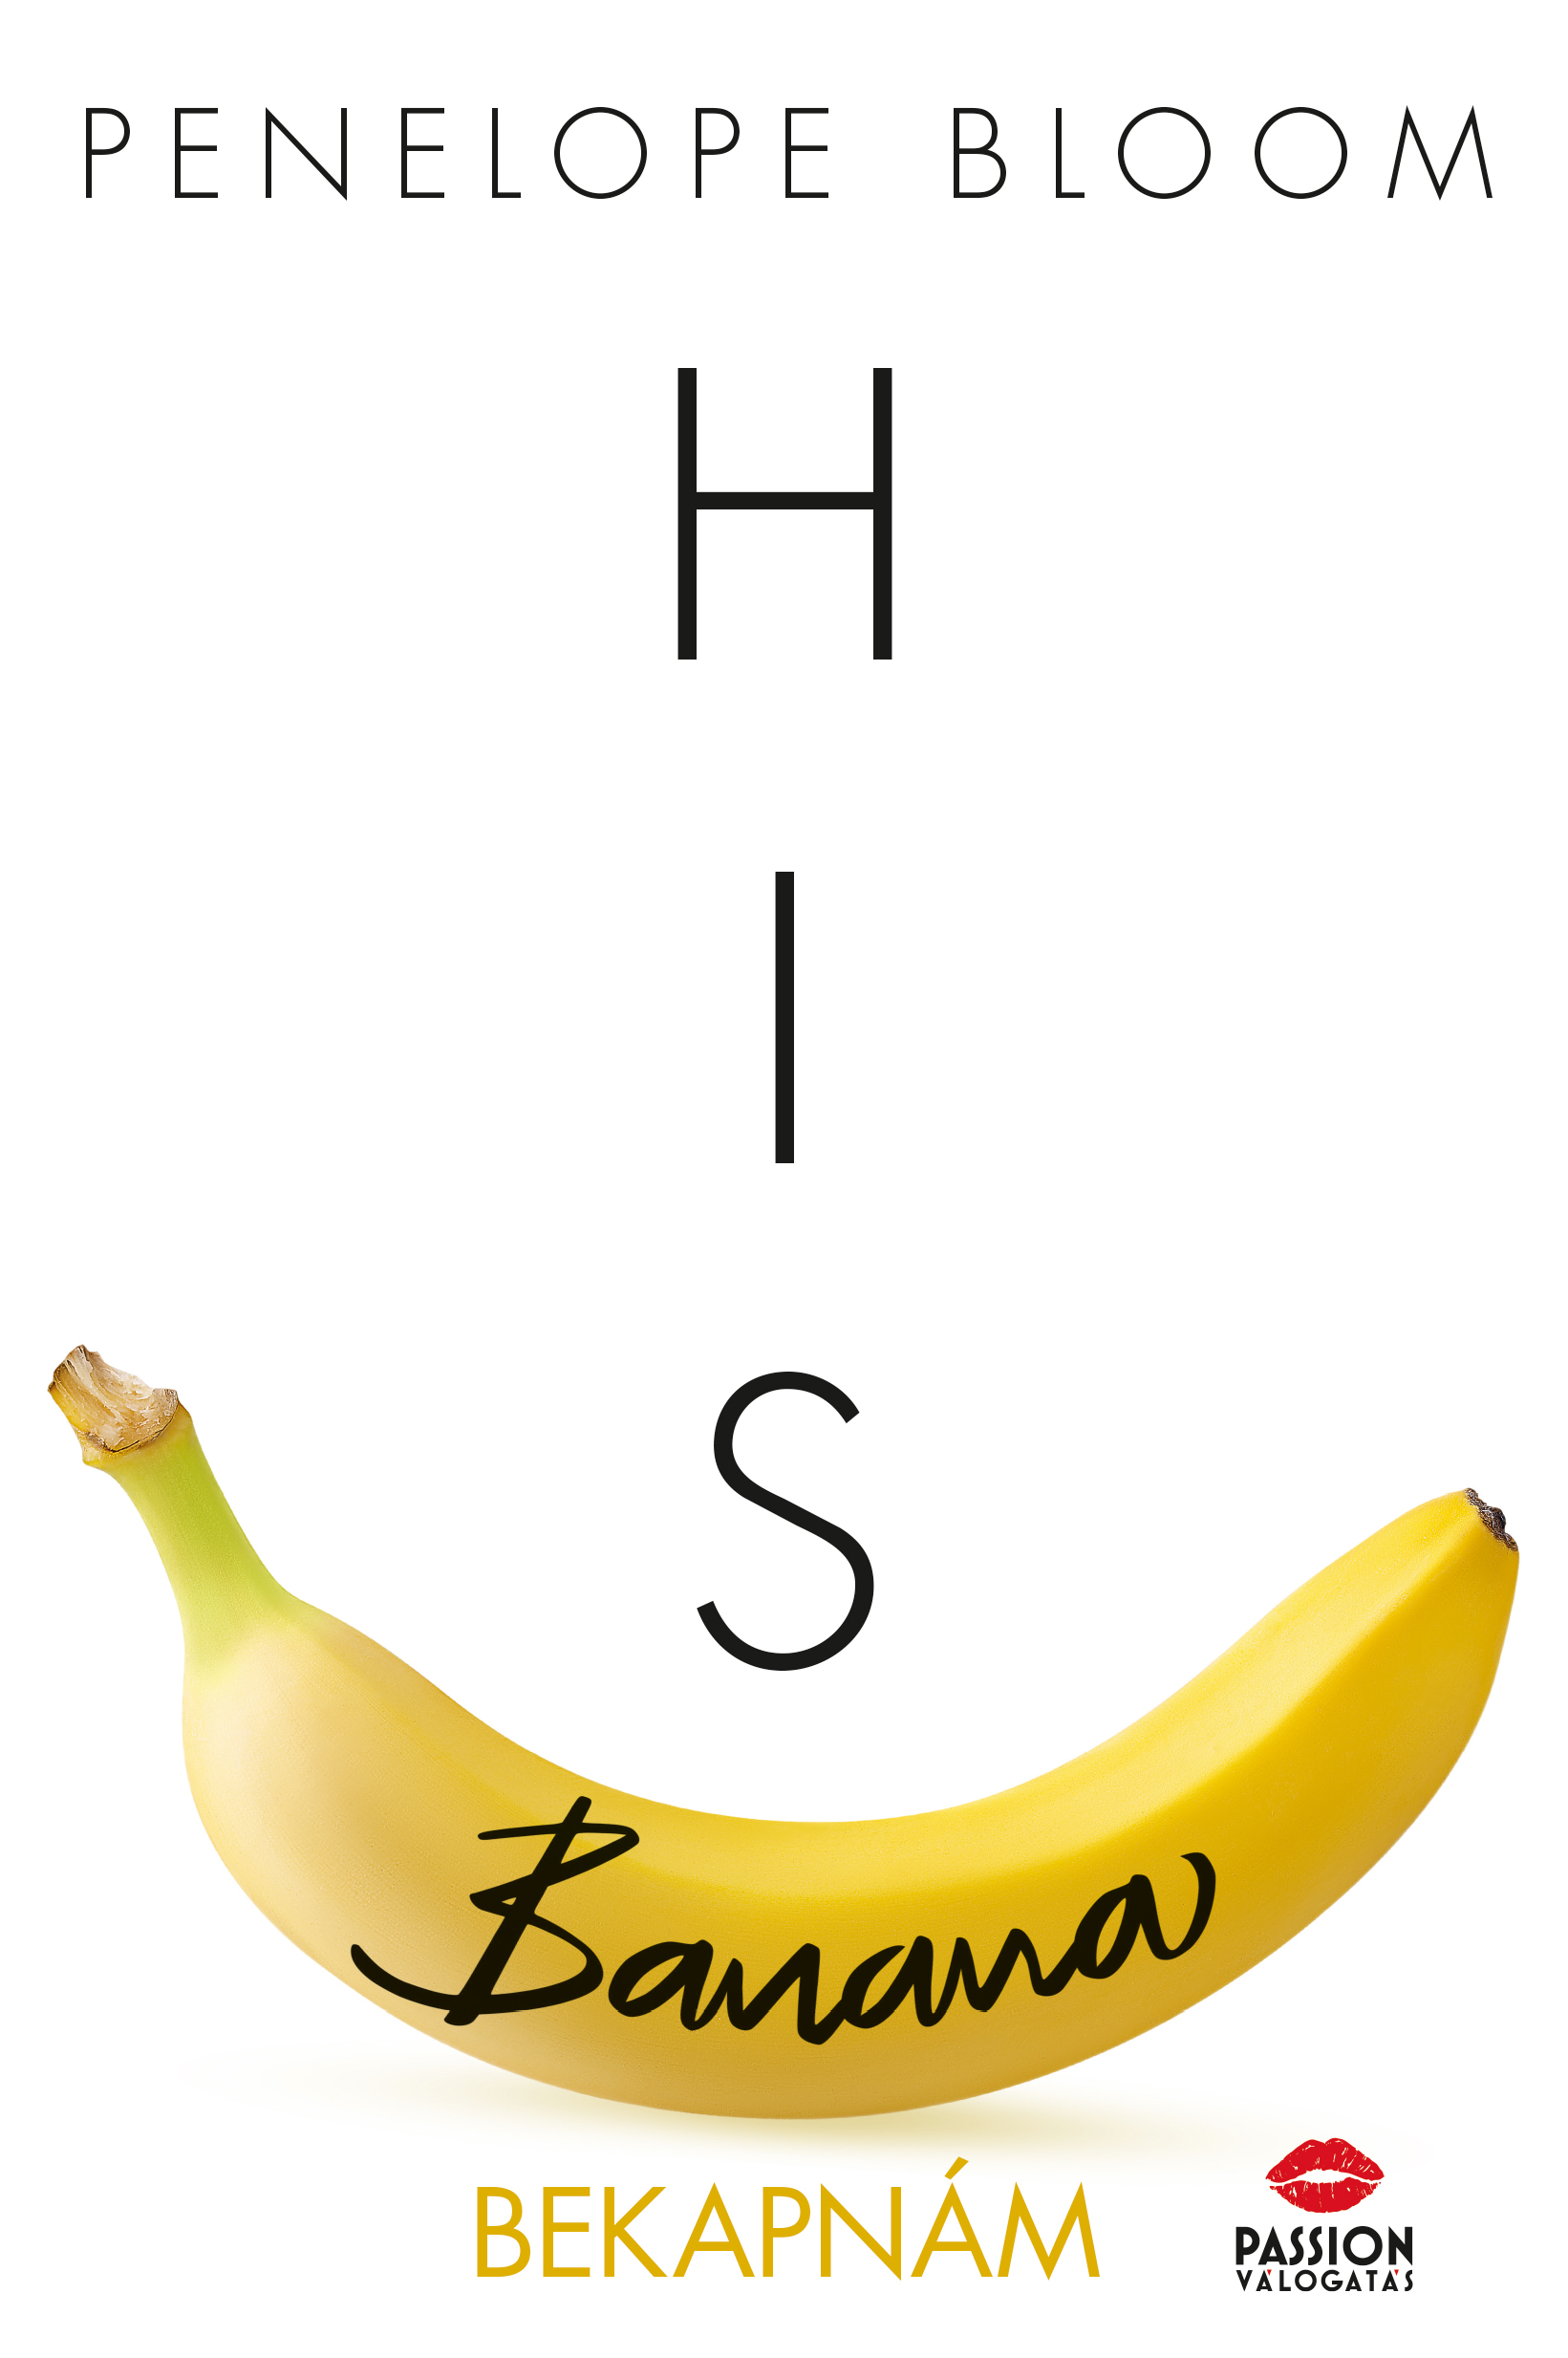 His Banana